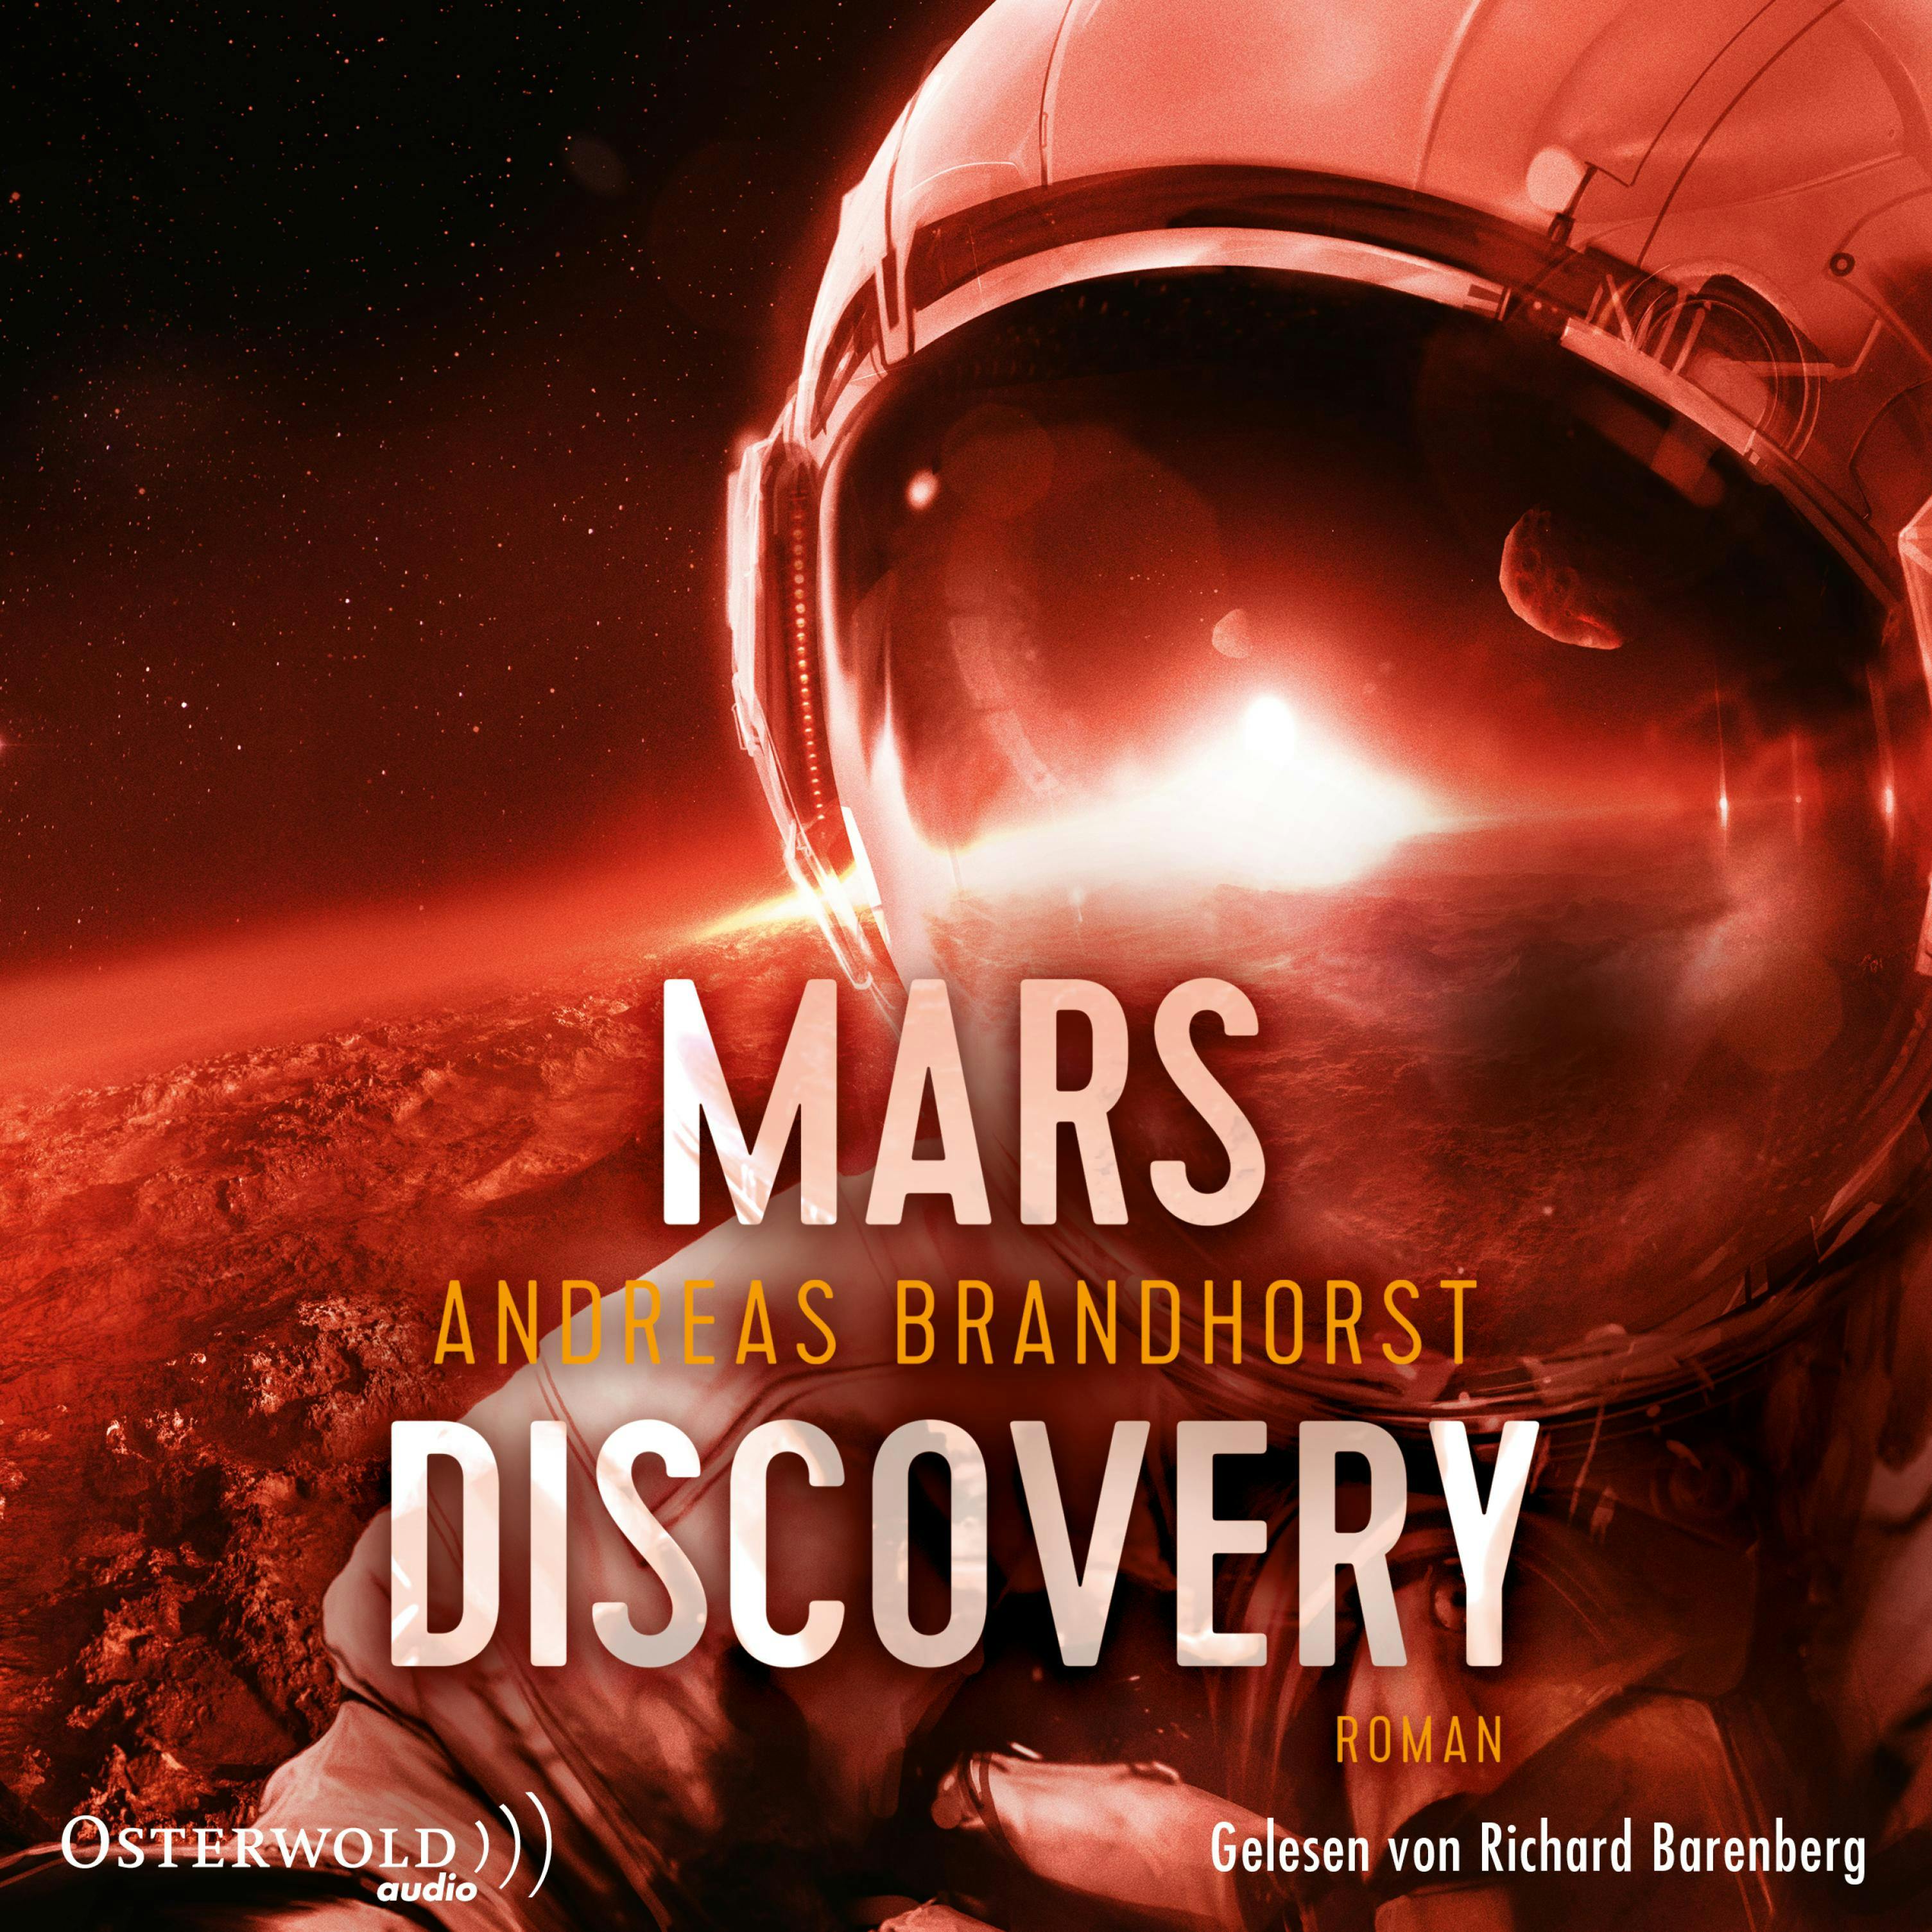 Mars Discovery - Andreas Brandhorst